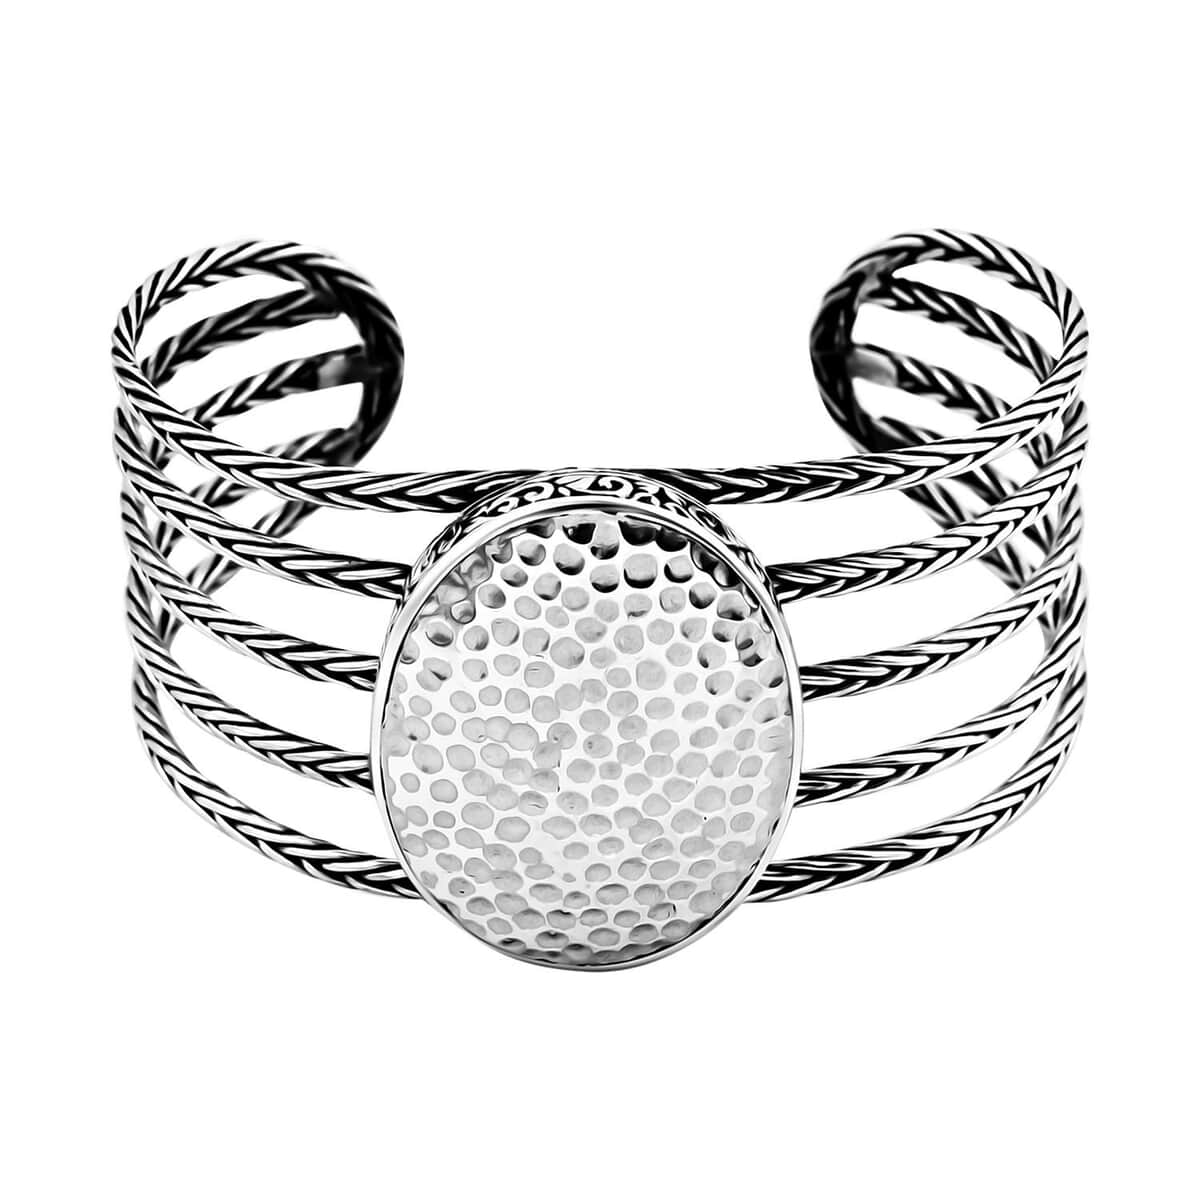 Bali Legacy Sterling Silver Cuff Bracelet (7.25 In) 41.85 Grams image number 0